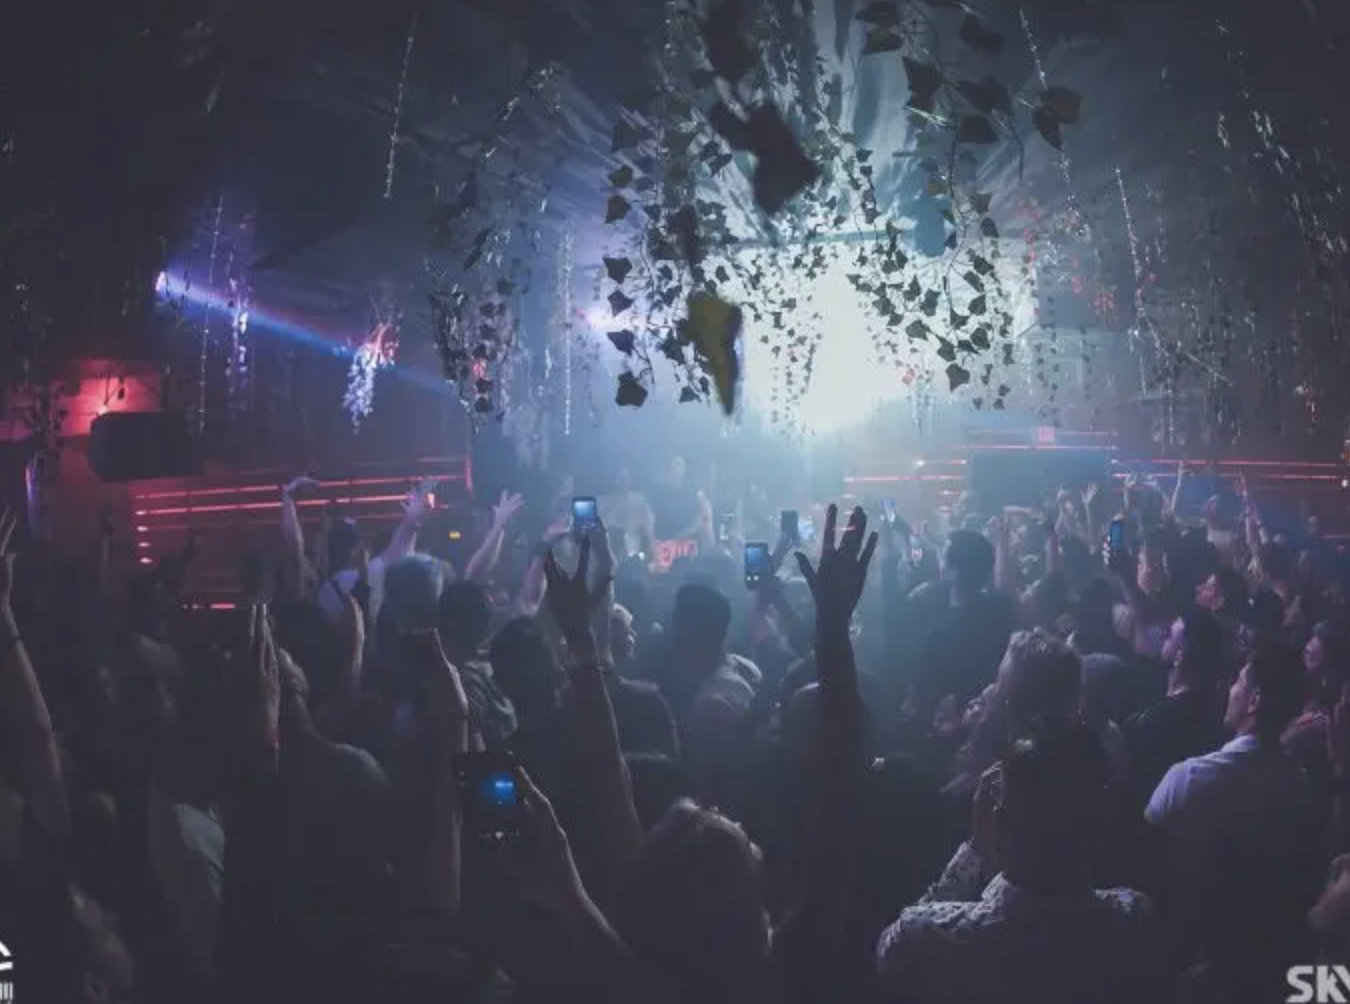 Miami Beach Treehouse Nightclub Up For Sale – Taking Bitcoin